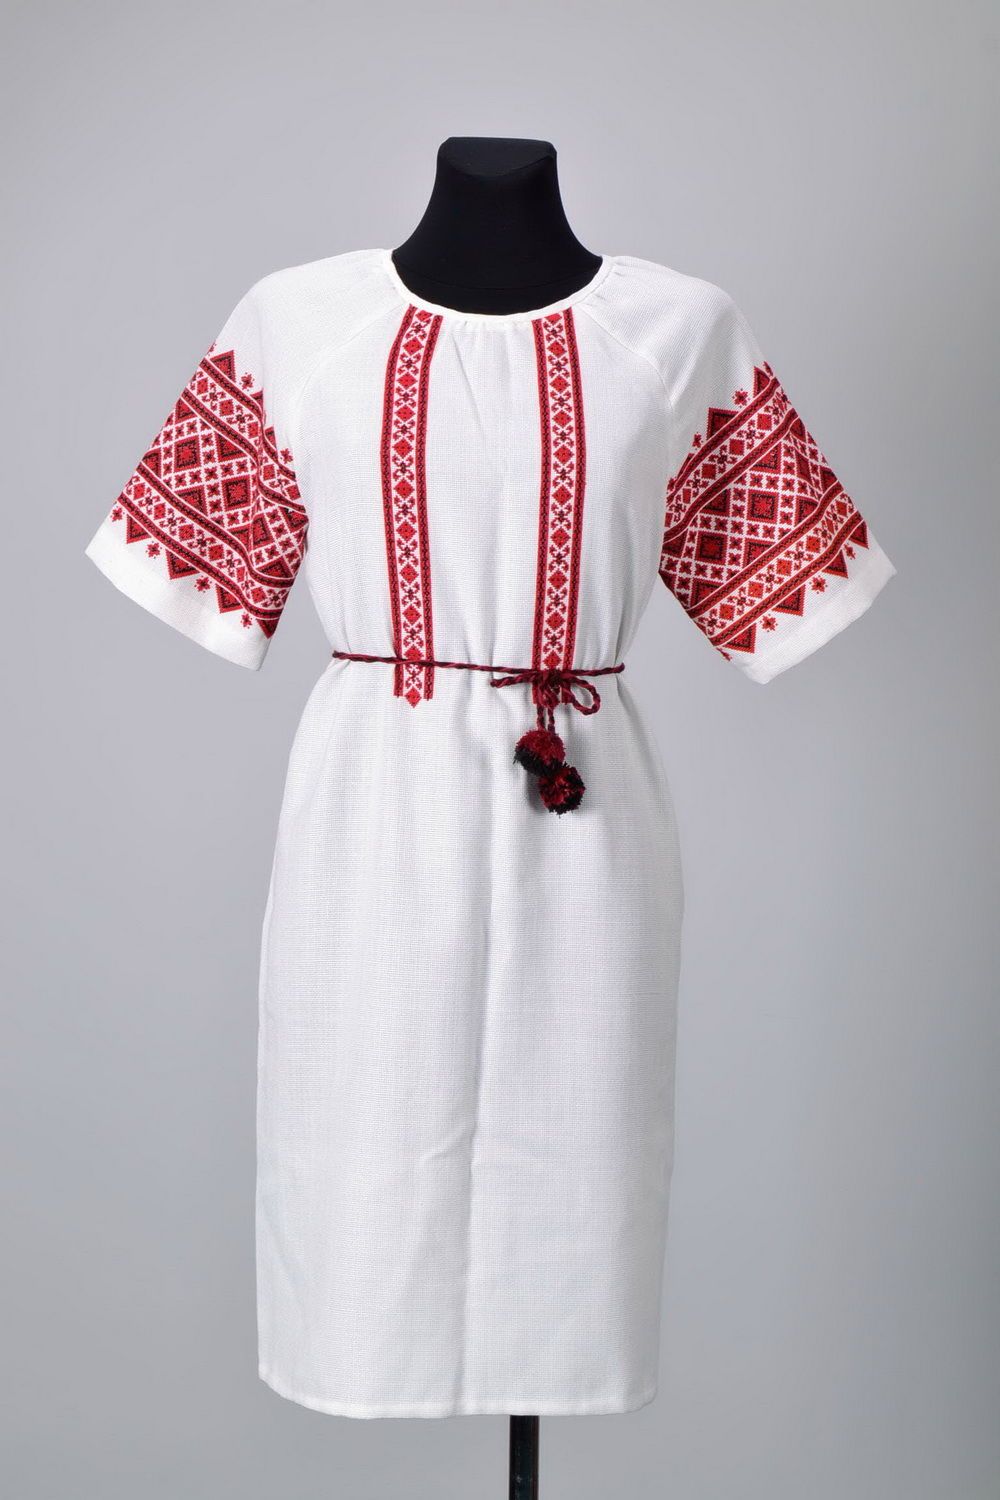 Robe ethnique en coton avec broderie photo 1